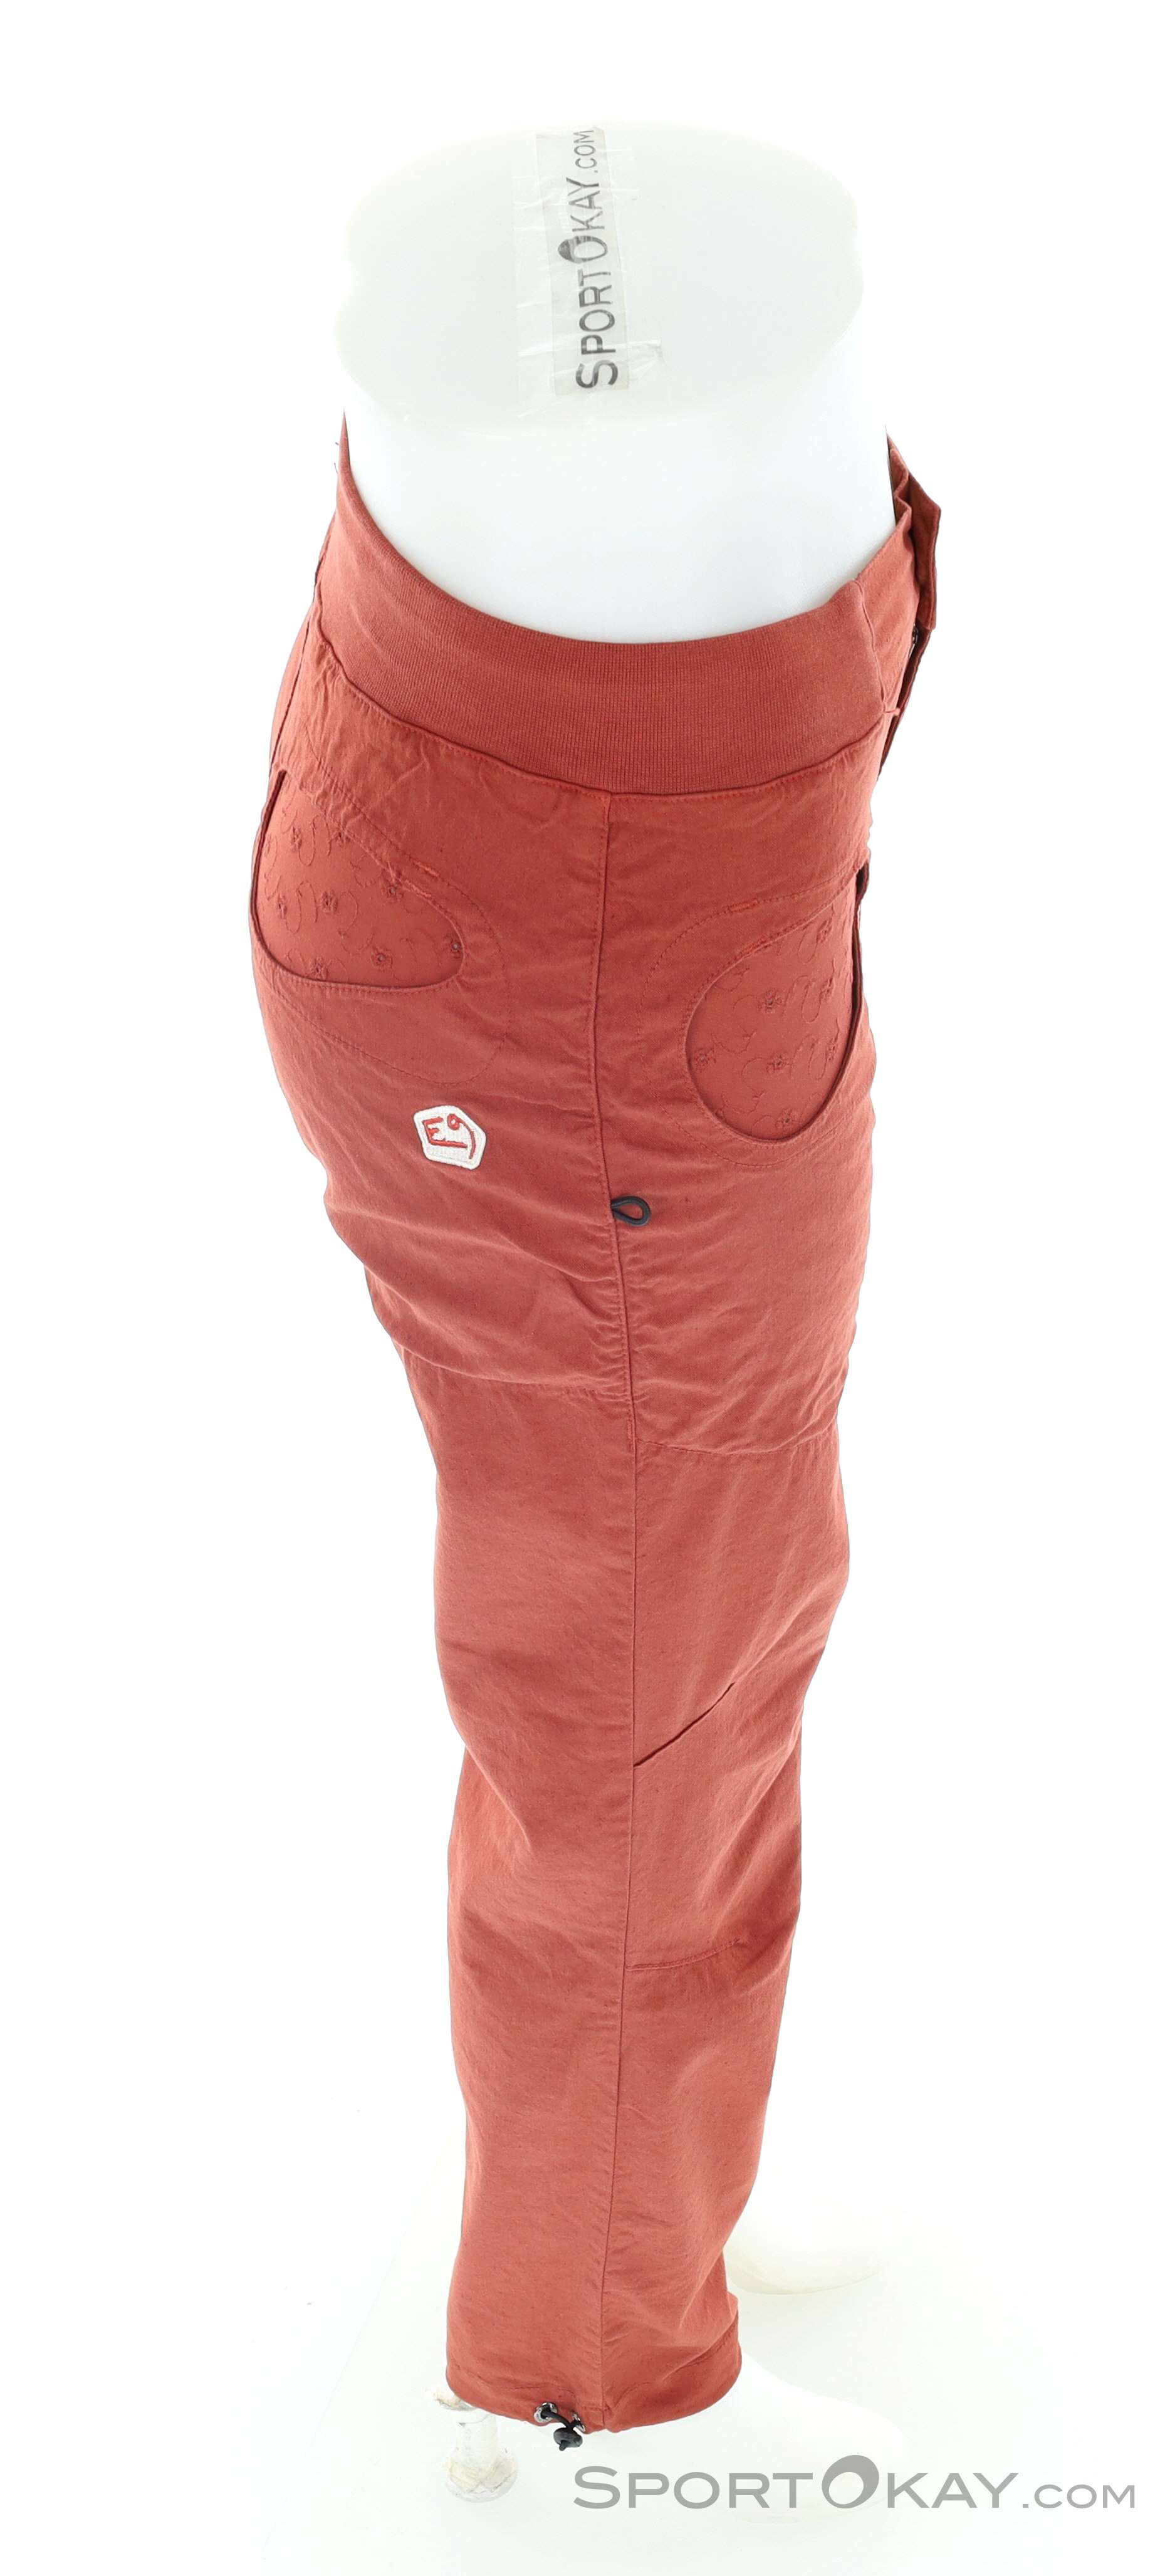 E9 Onda Flax Women Climbing Pants - Pants - Climbing Clothing